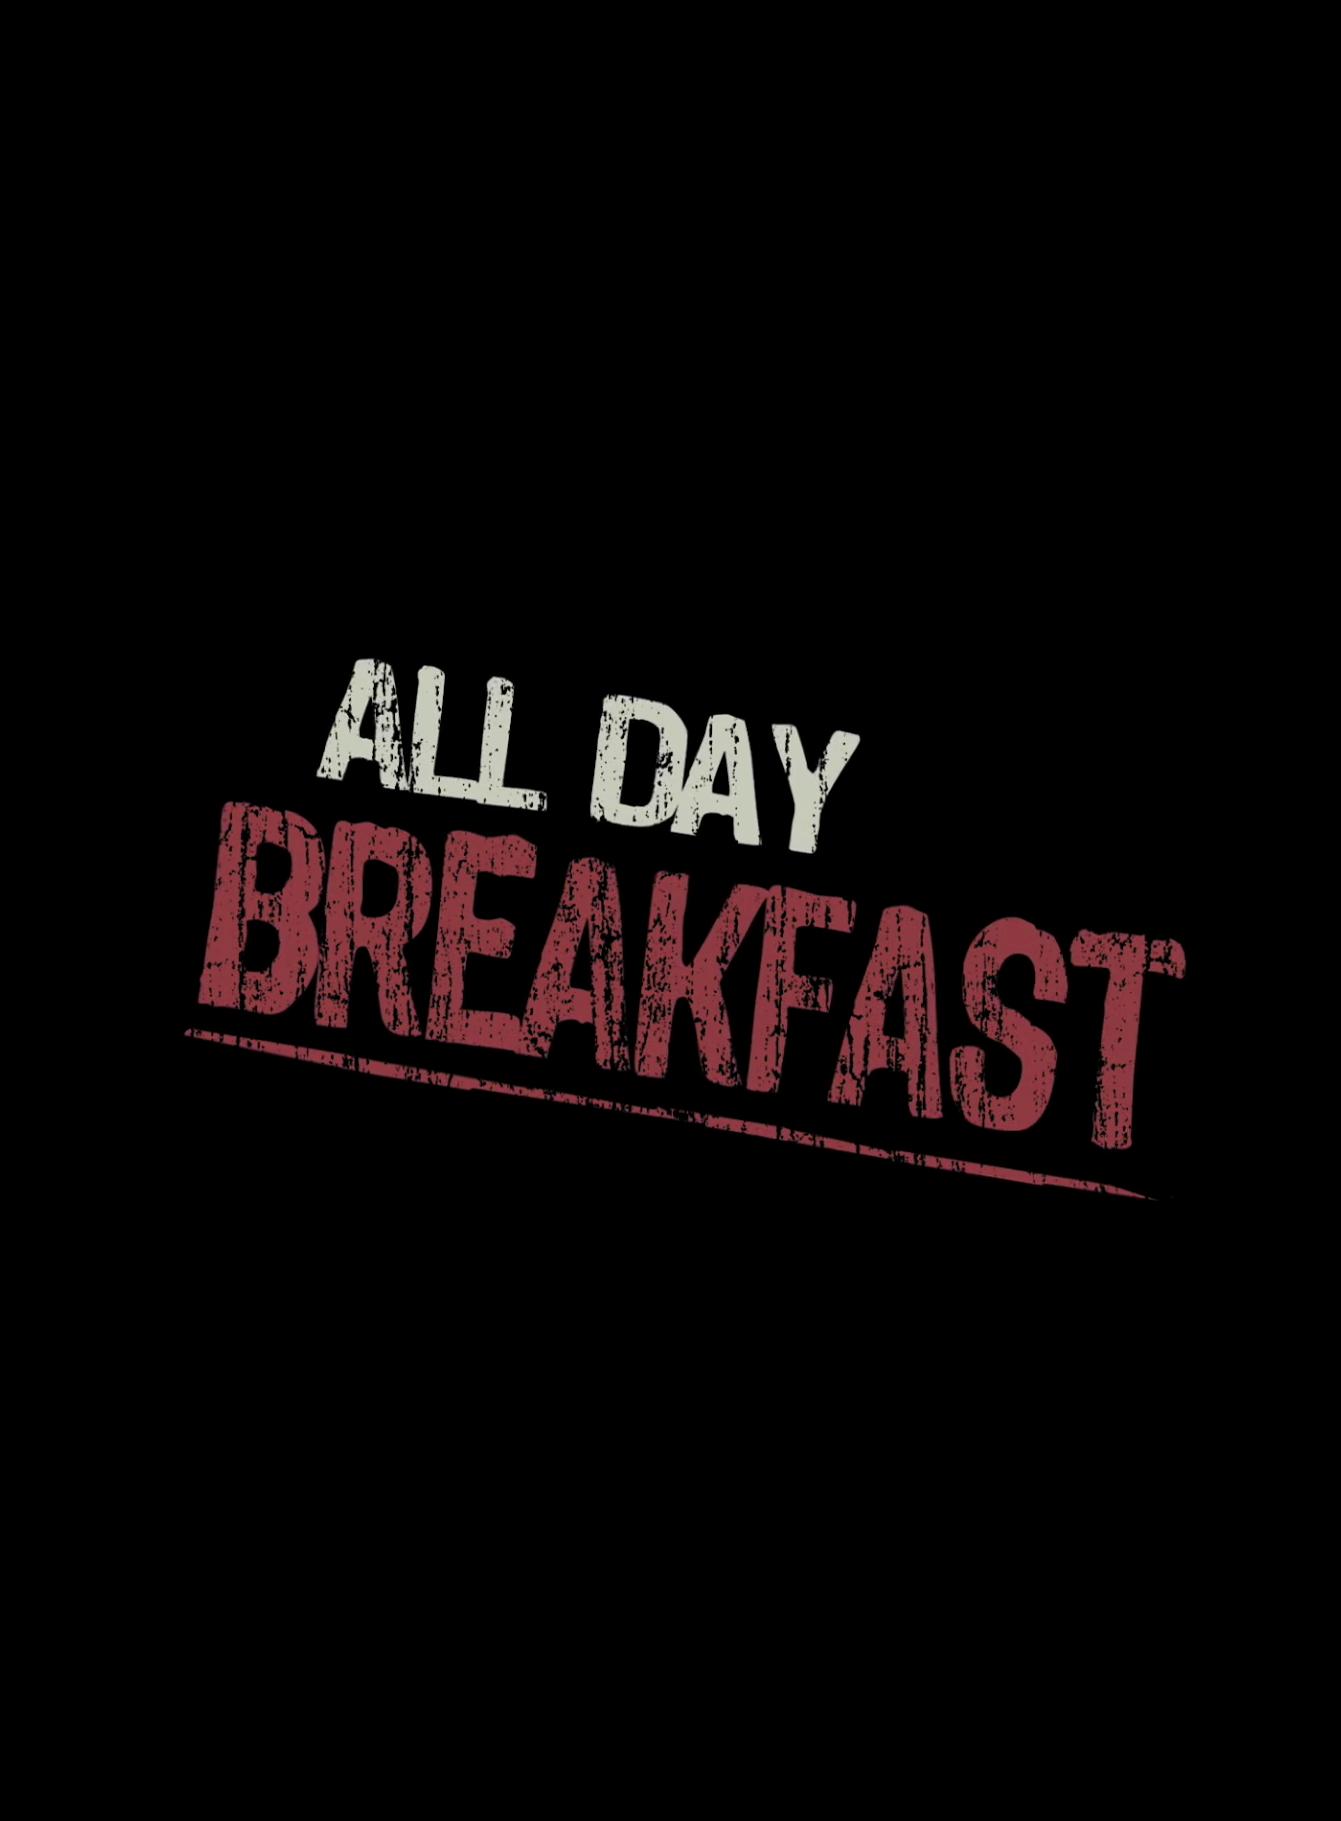 All Day Breakfast